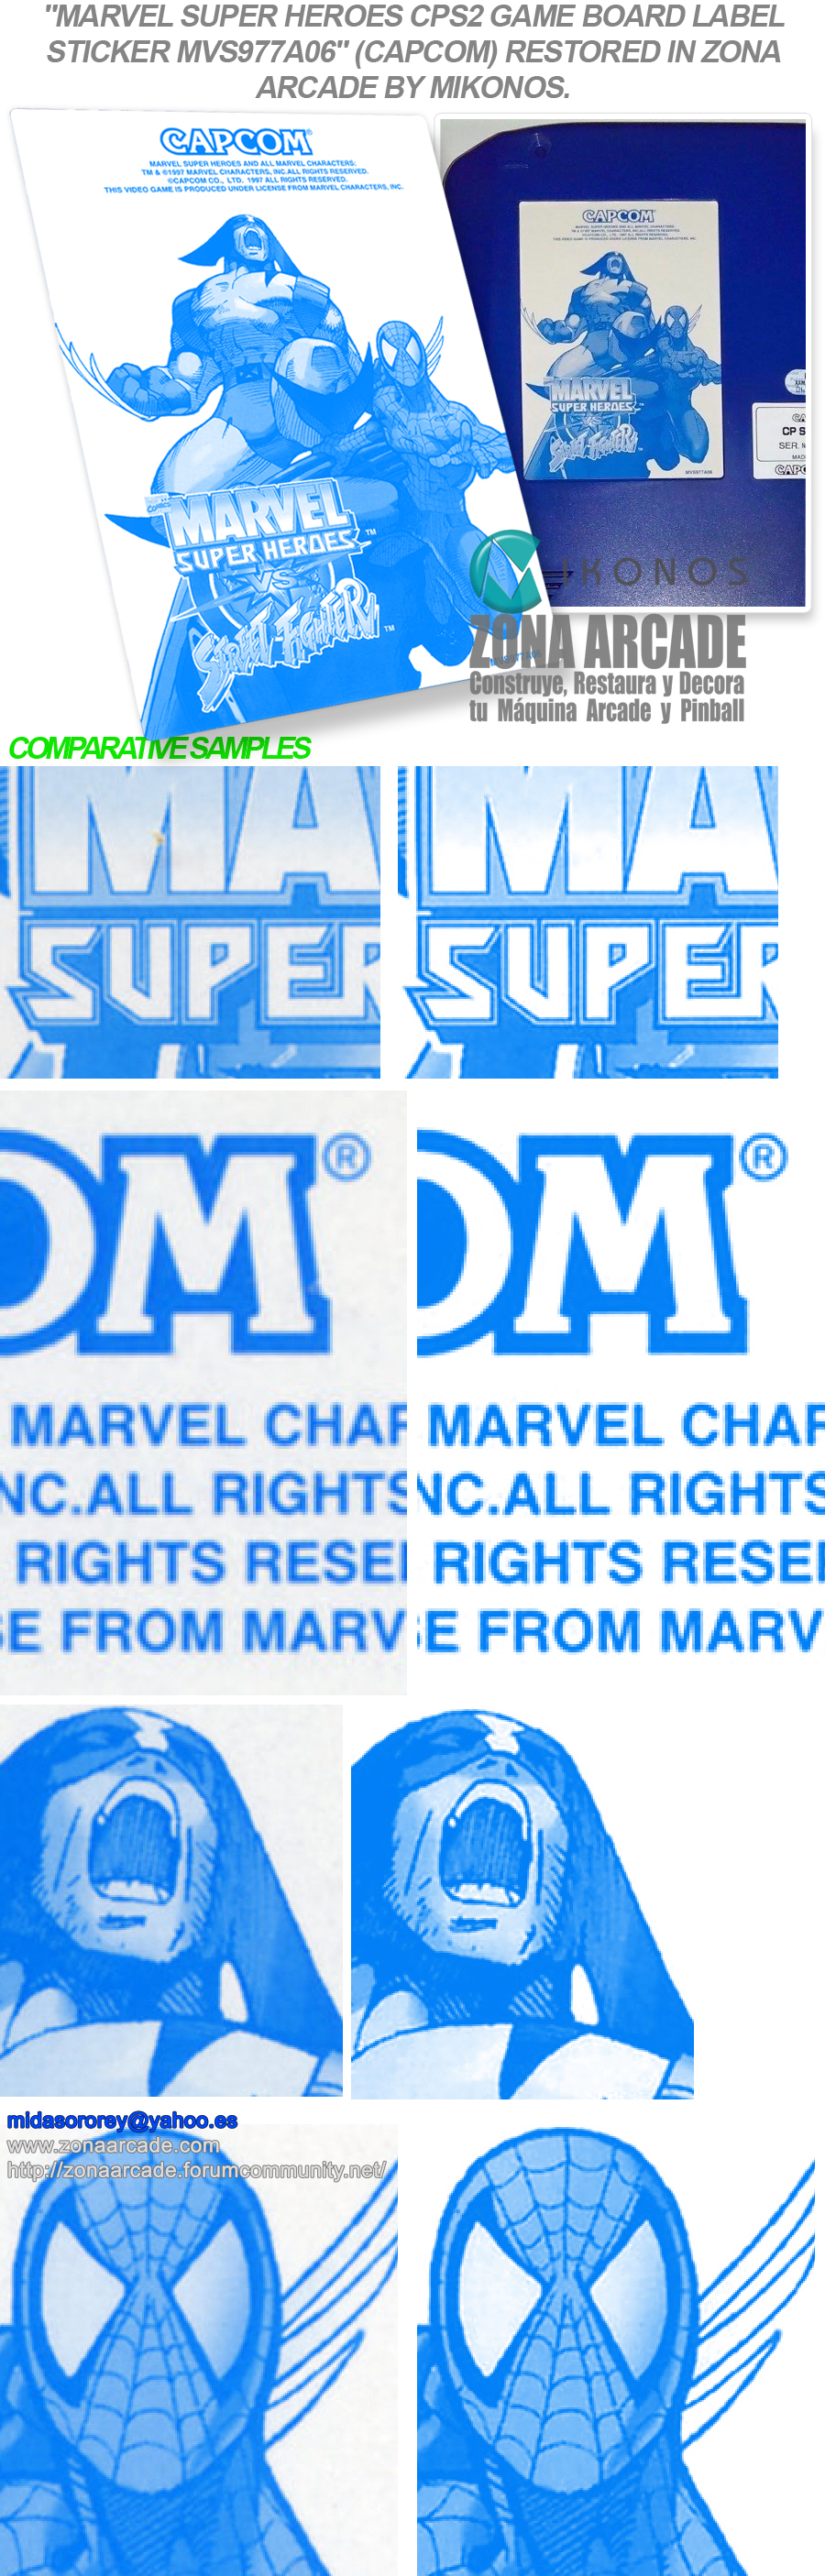 Marvel-vs-Street Fighter-CPS2-Game-Board-Label-Sticker-MVS977A06-Restored-Mikonos1